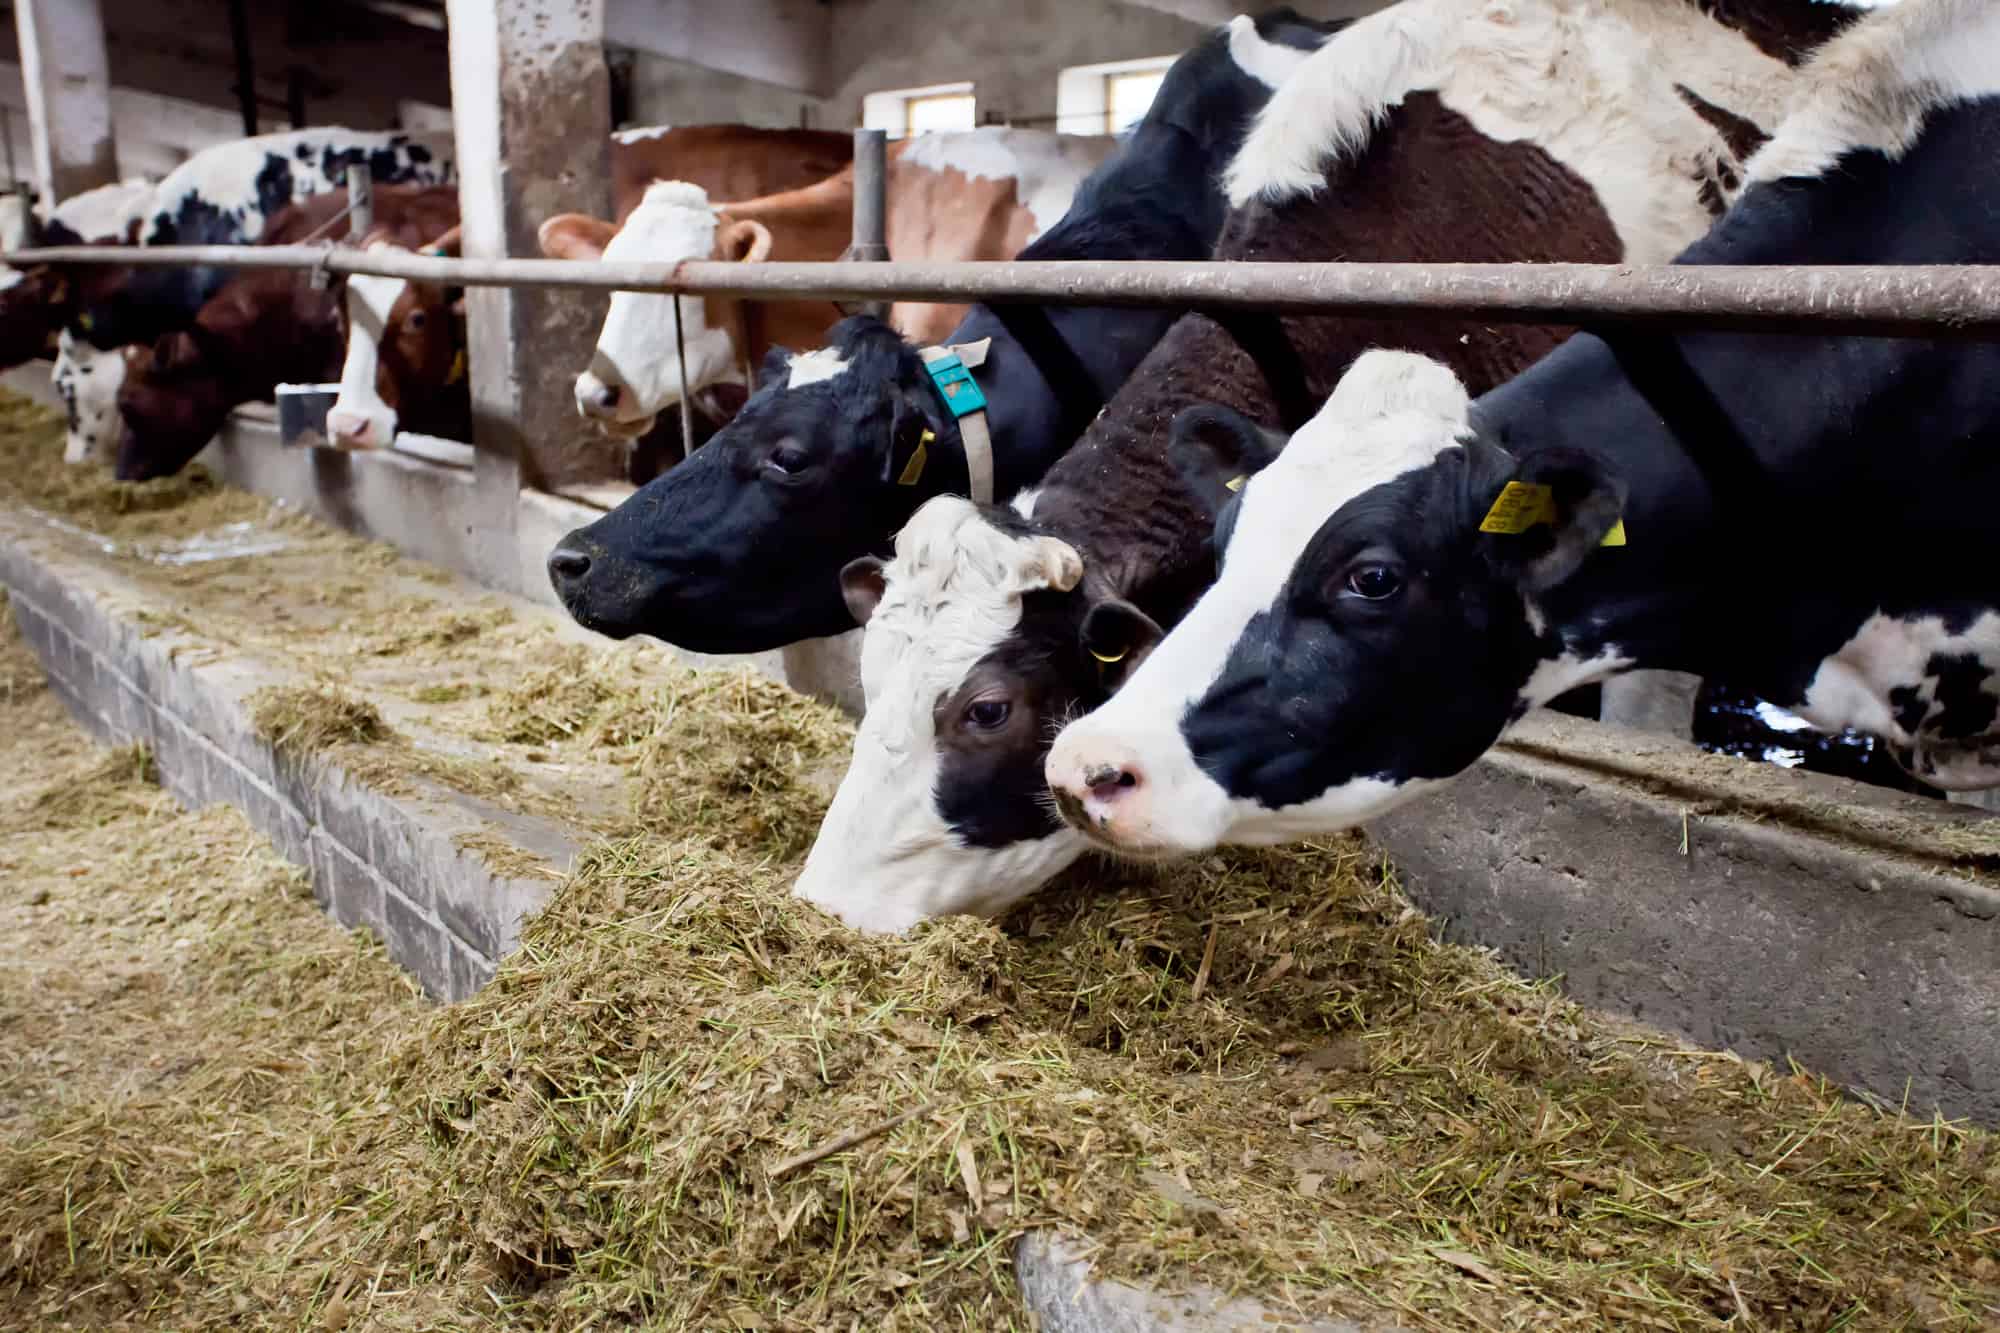 Cows eating grass on a farm